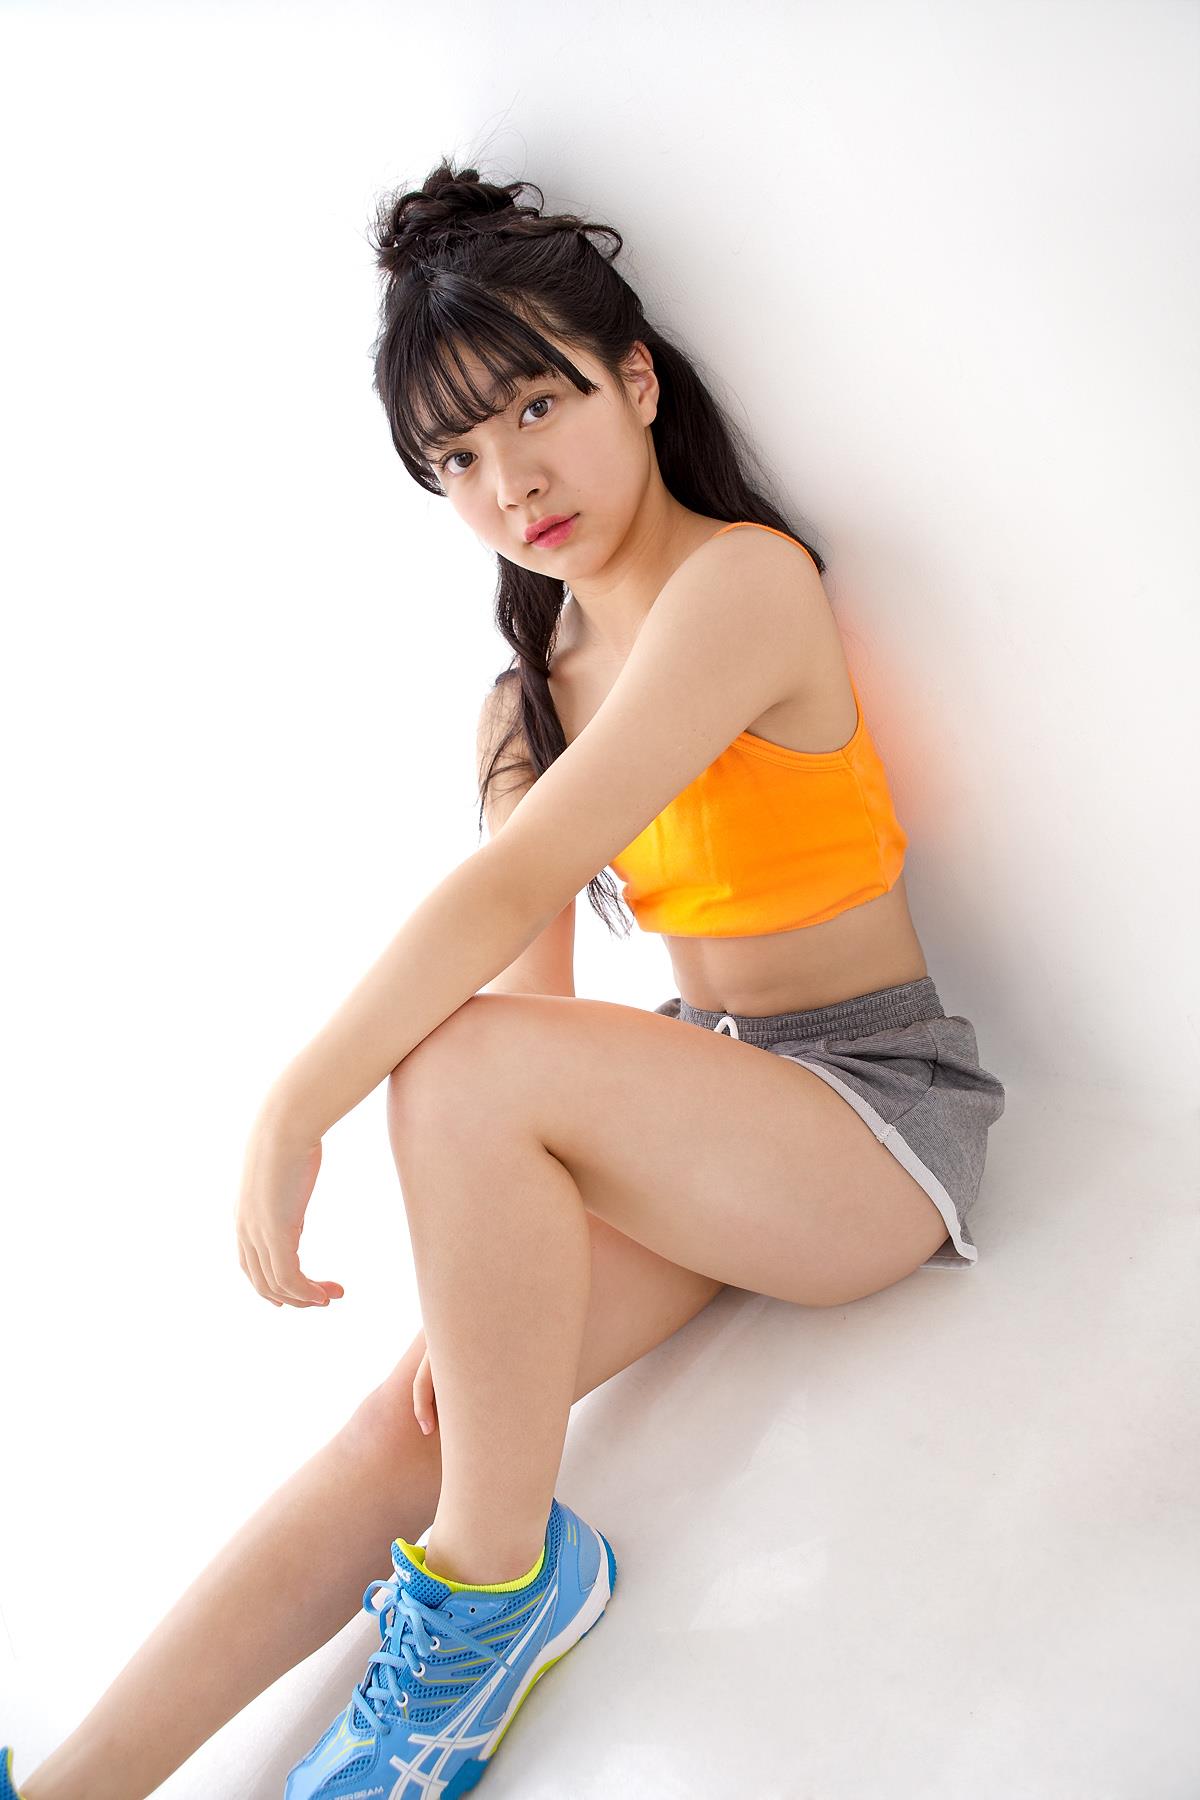 Minisuka.tv Saria Natsume 夏目咲莉愛 Premium Gallery 02 - 35.jpg